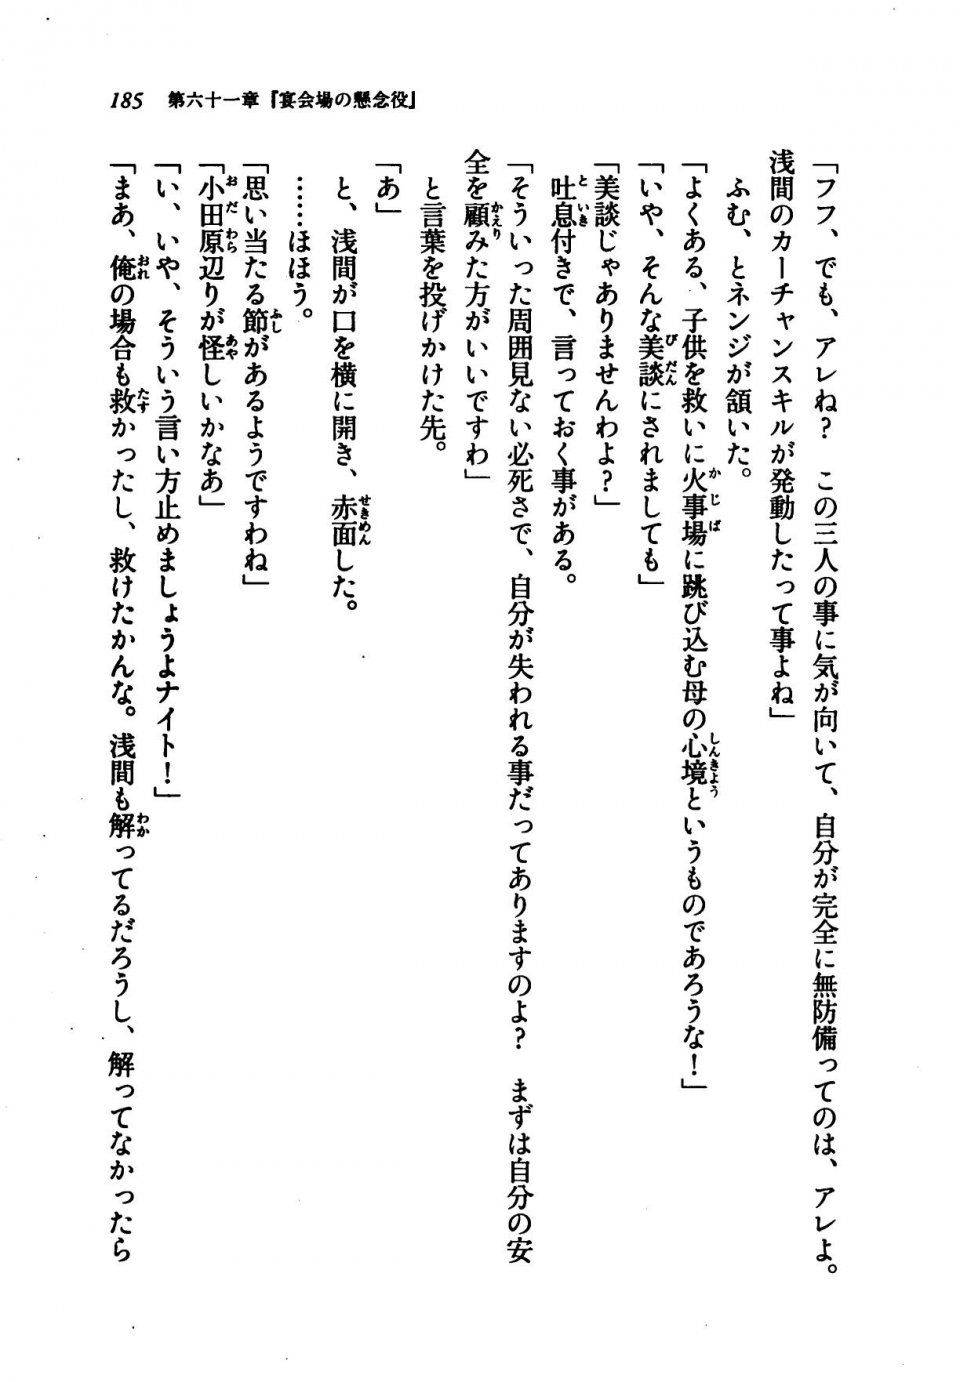 Kyoukai Senjou no Horizon LN Vol 21(8C) Part 1 - Photo #184